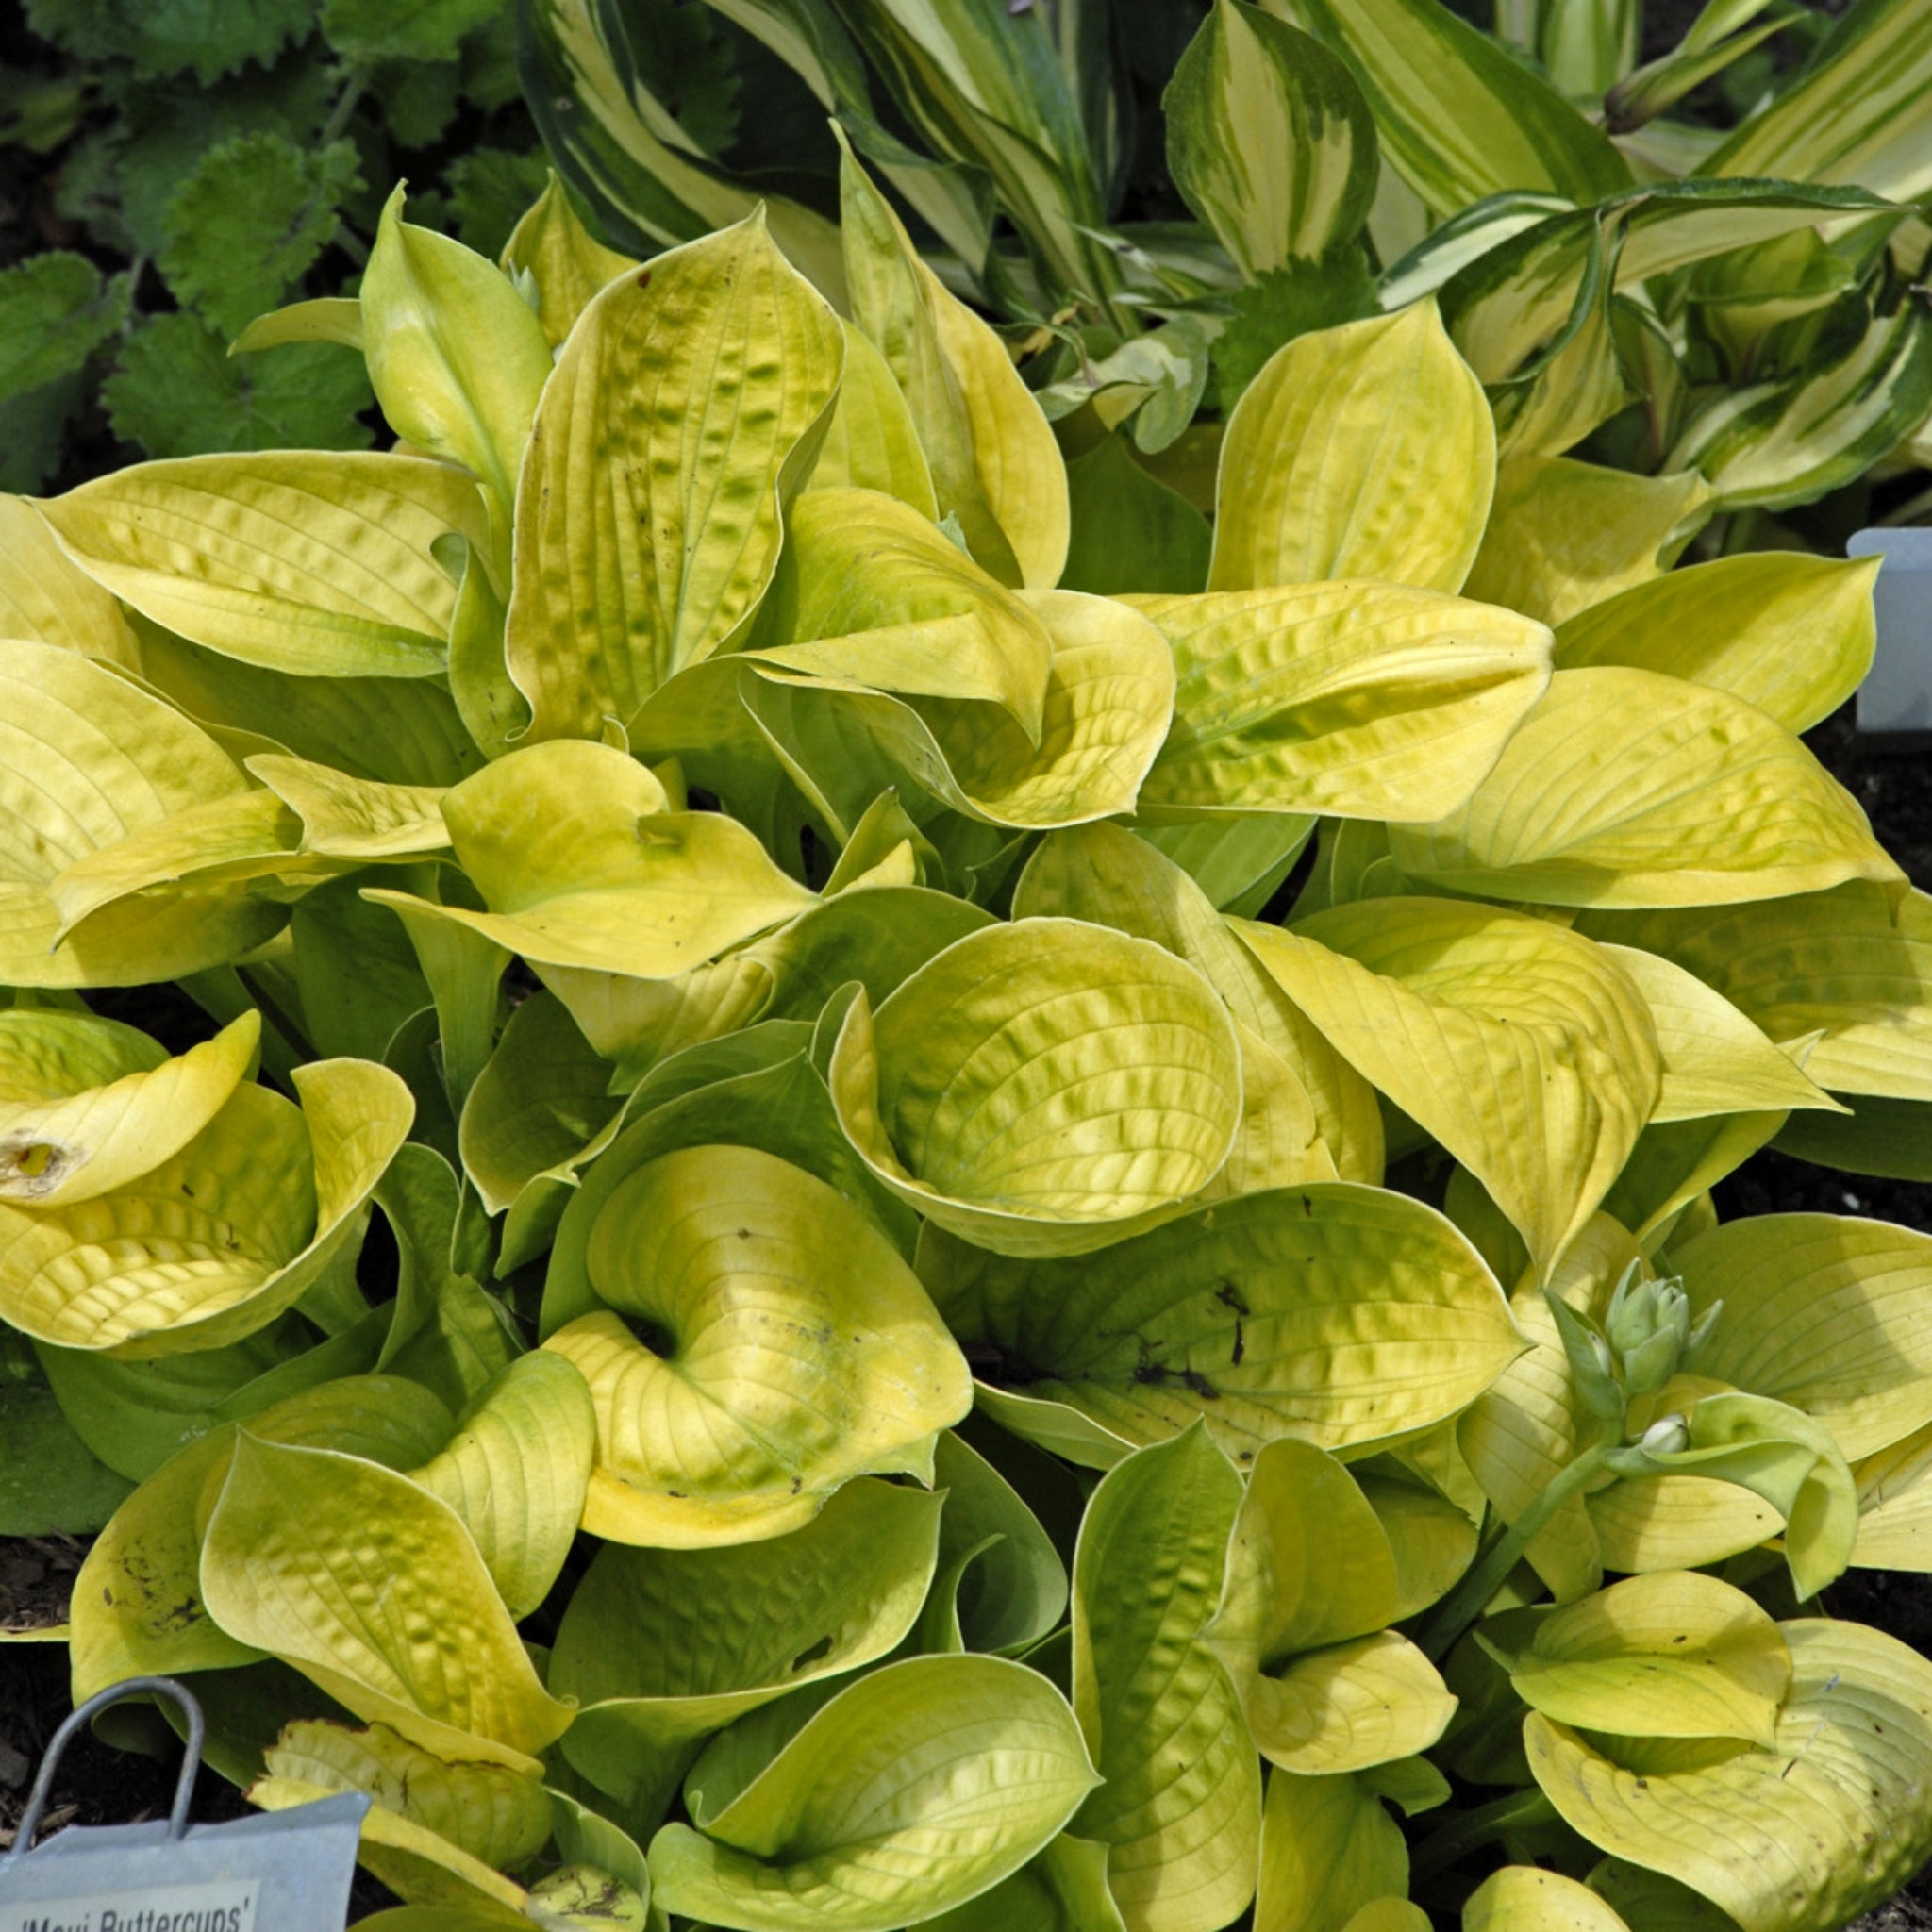 Maui Buttercups Hosta - Shade Perennial Sun Tolerant Hosta Plant – NH Hostas